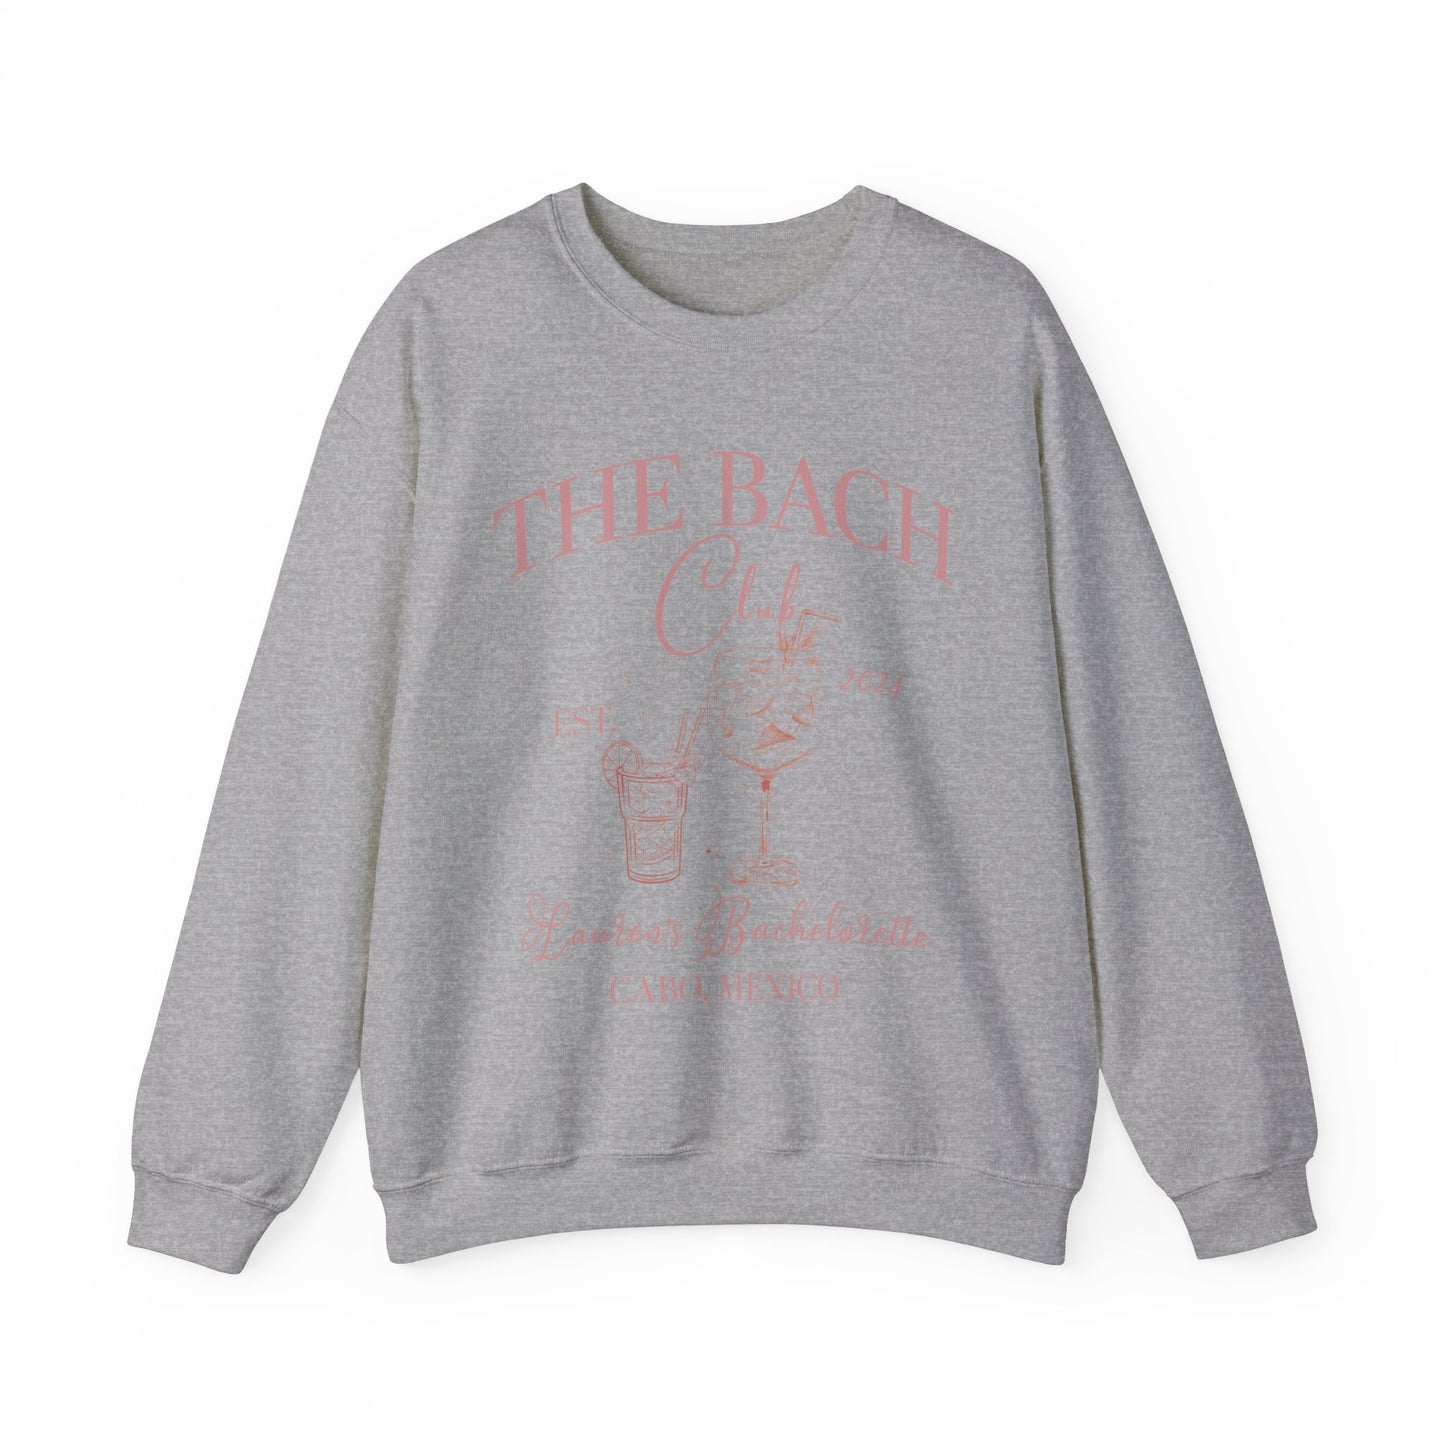 Custom The Bach Club Sweatshirt, Custom Location Bachelorette Sweatshirt, Personalized Bride Sweatshirt, Sweatshirt for Bridal Party, S1494